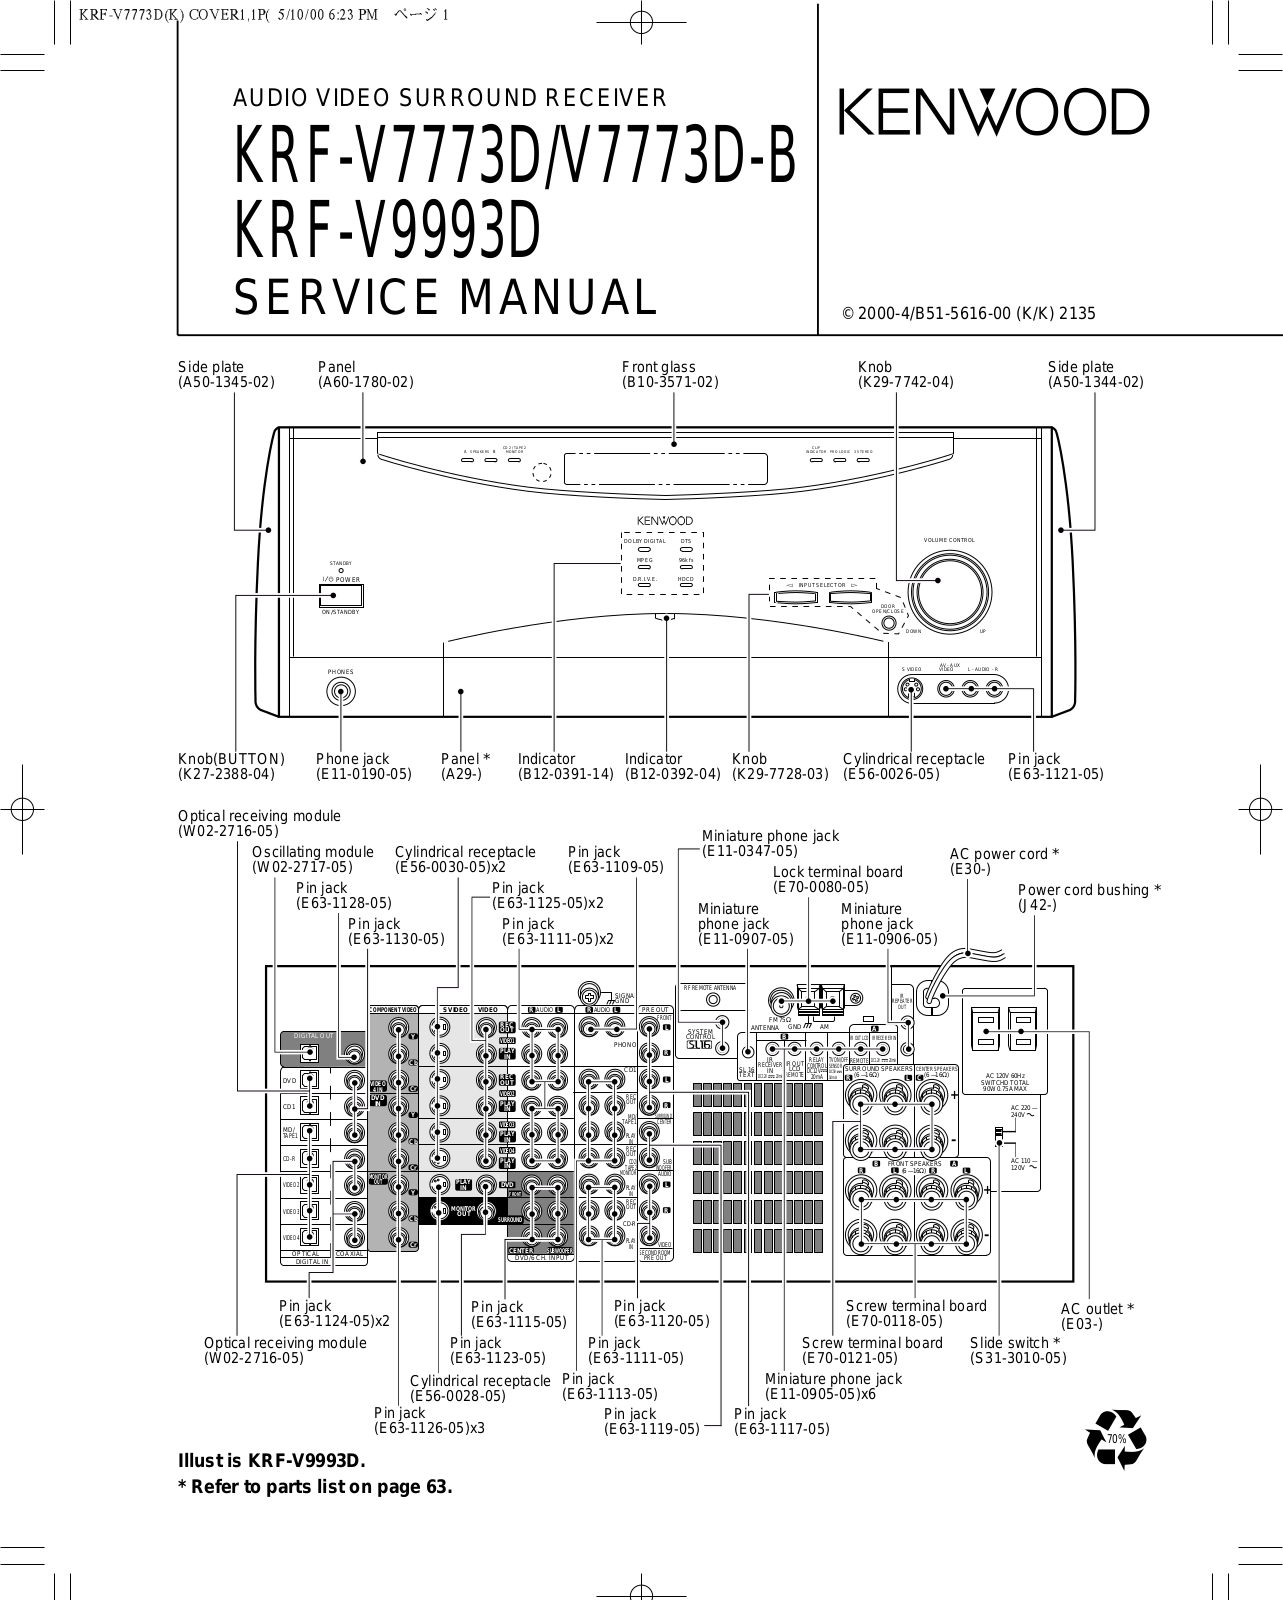 Kenwood KRFV-7773-D Service manual